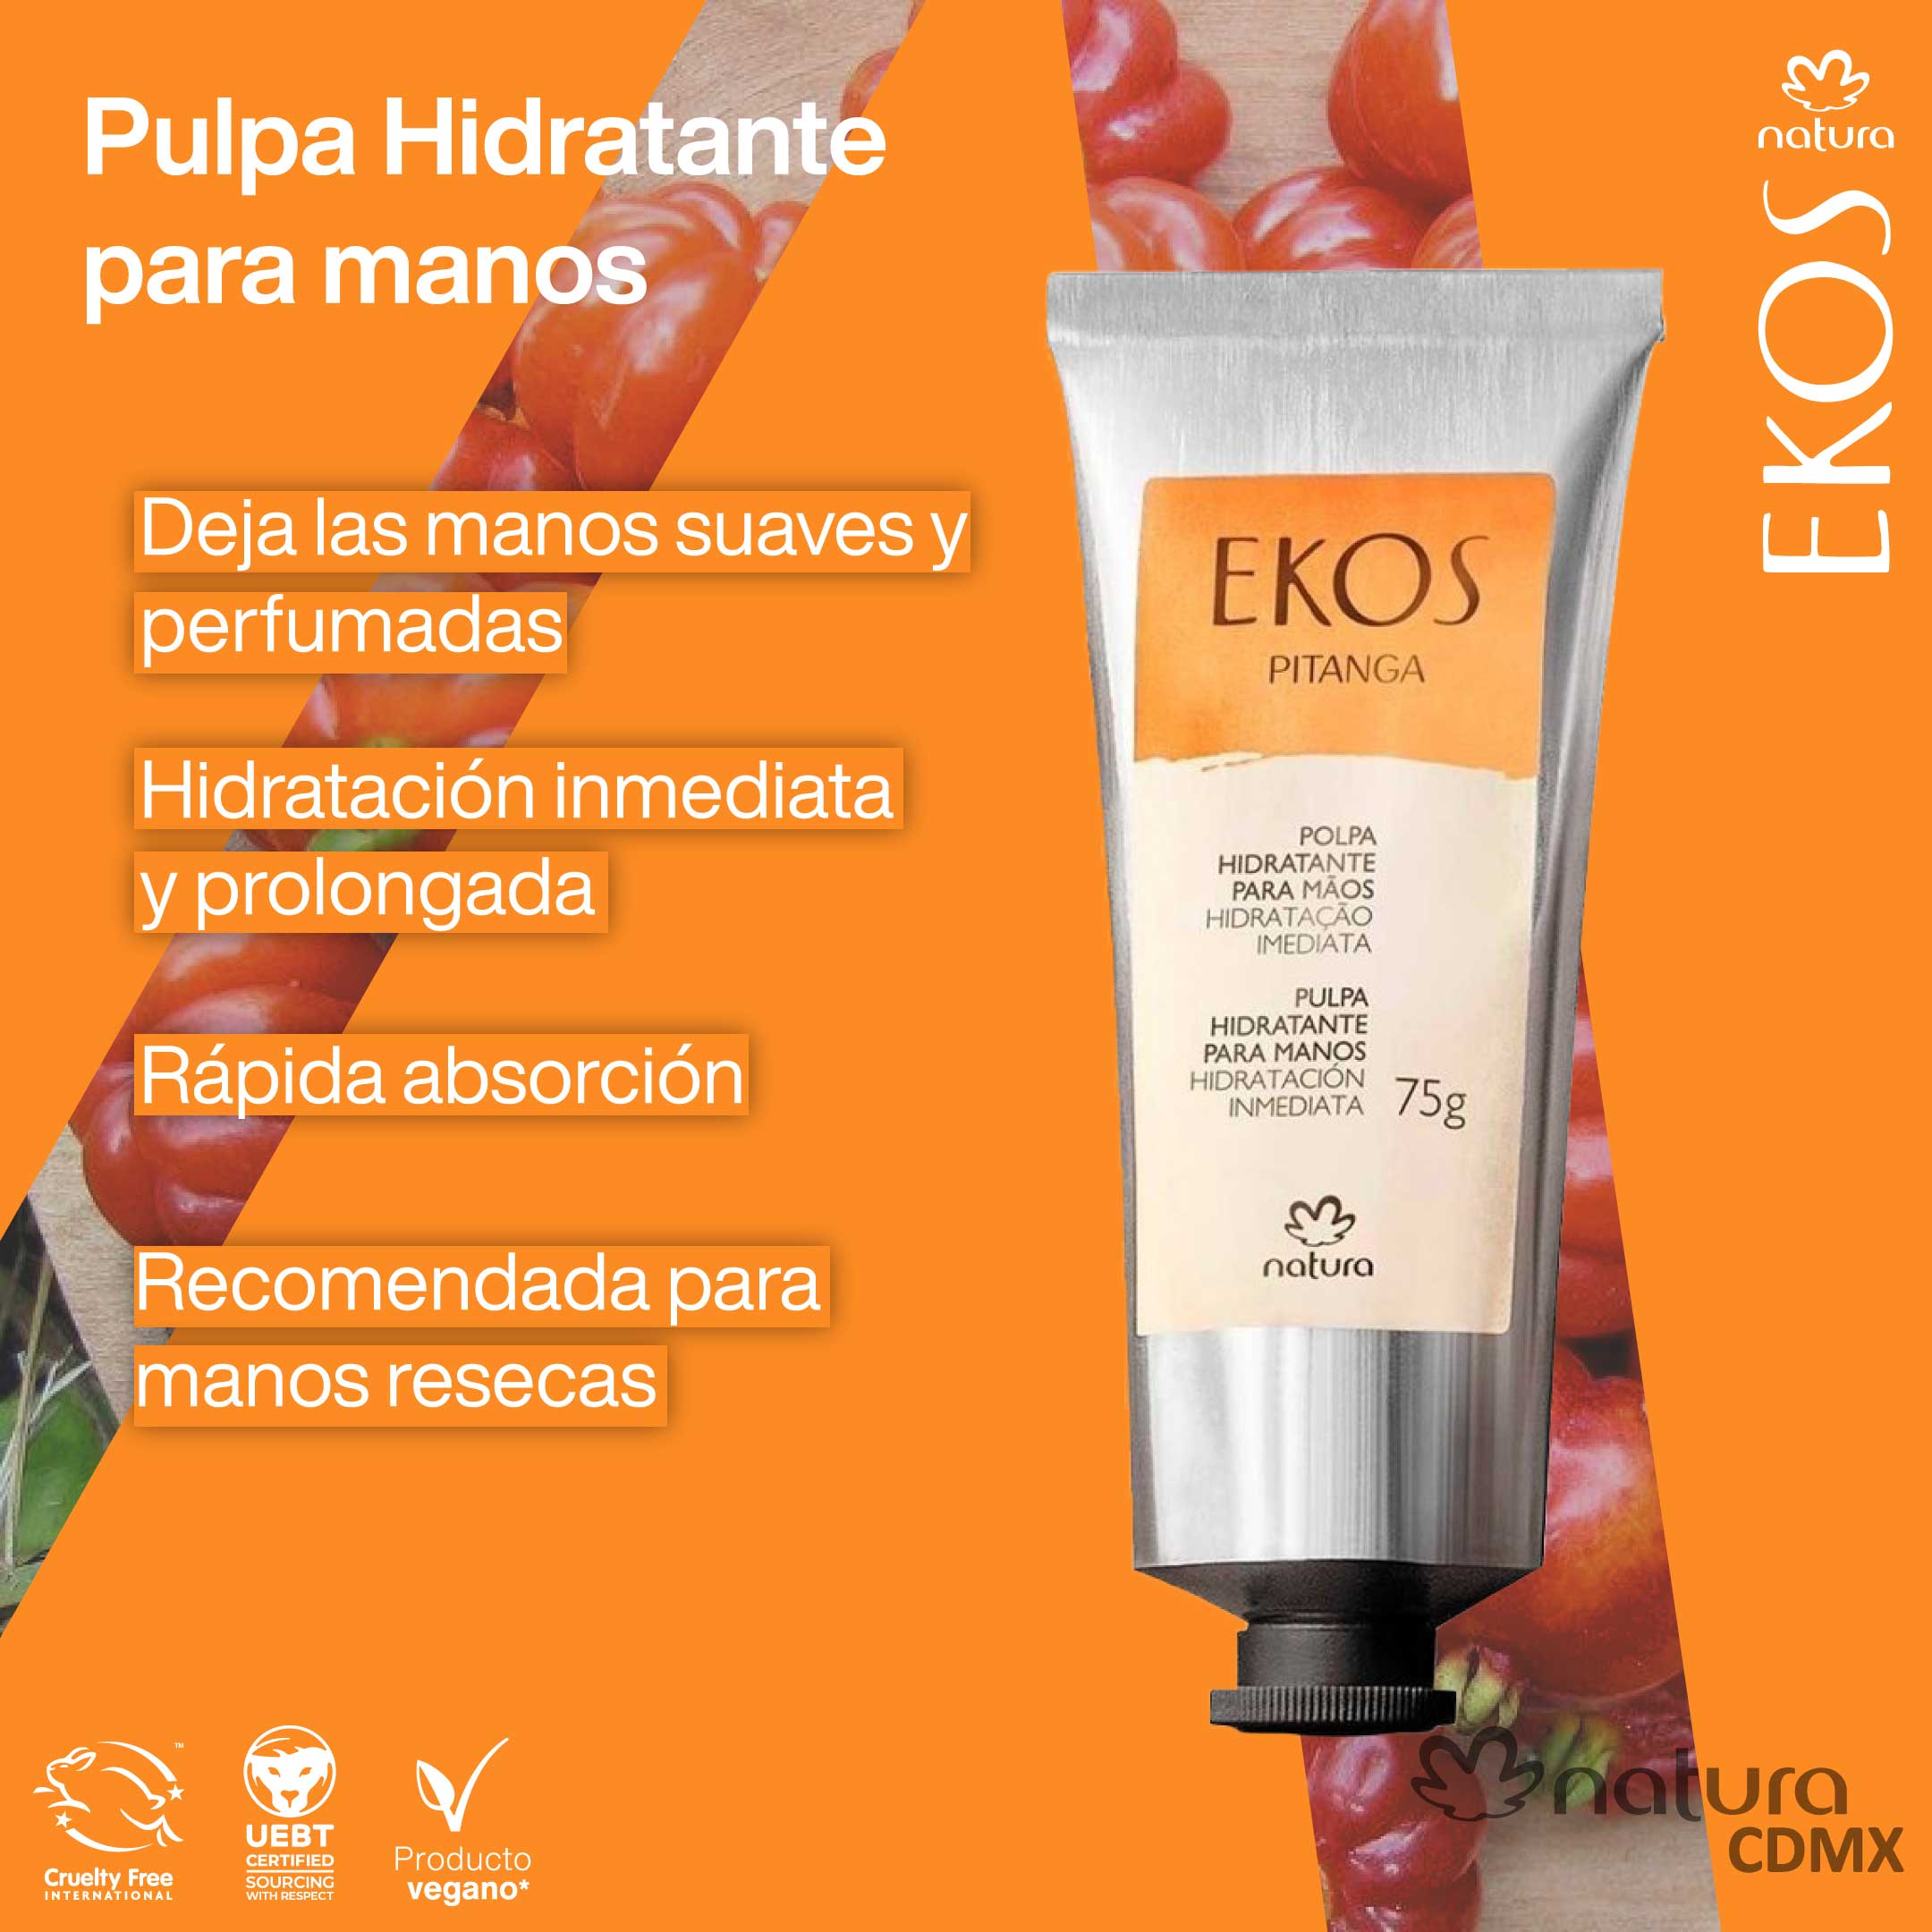 Ekos Natura pitanga • Natura de México • Perfumes • Jabones • Mousse